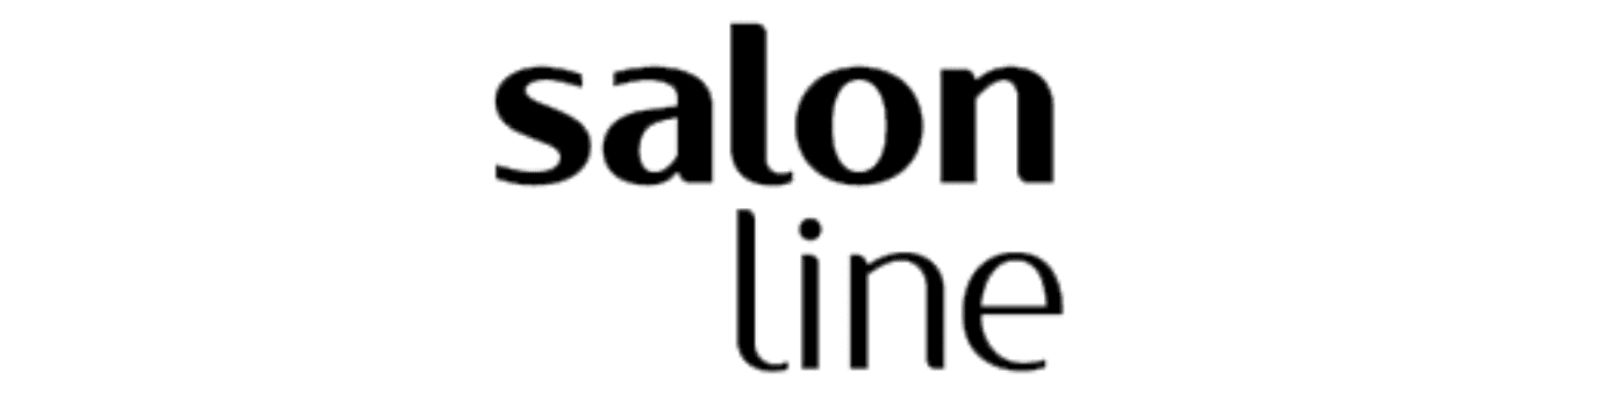 WhatsApp Salon Line: Telefone SAC, Chat, E-mail, Ouvidoria!